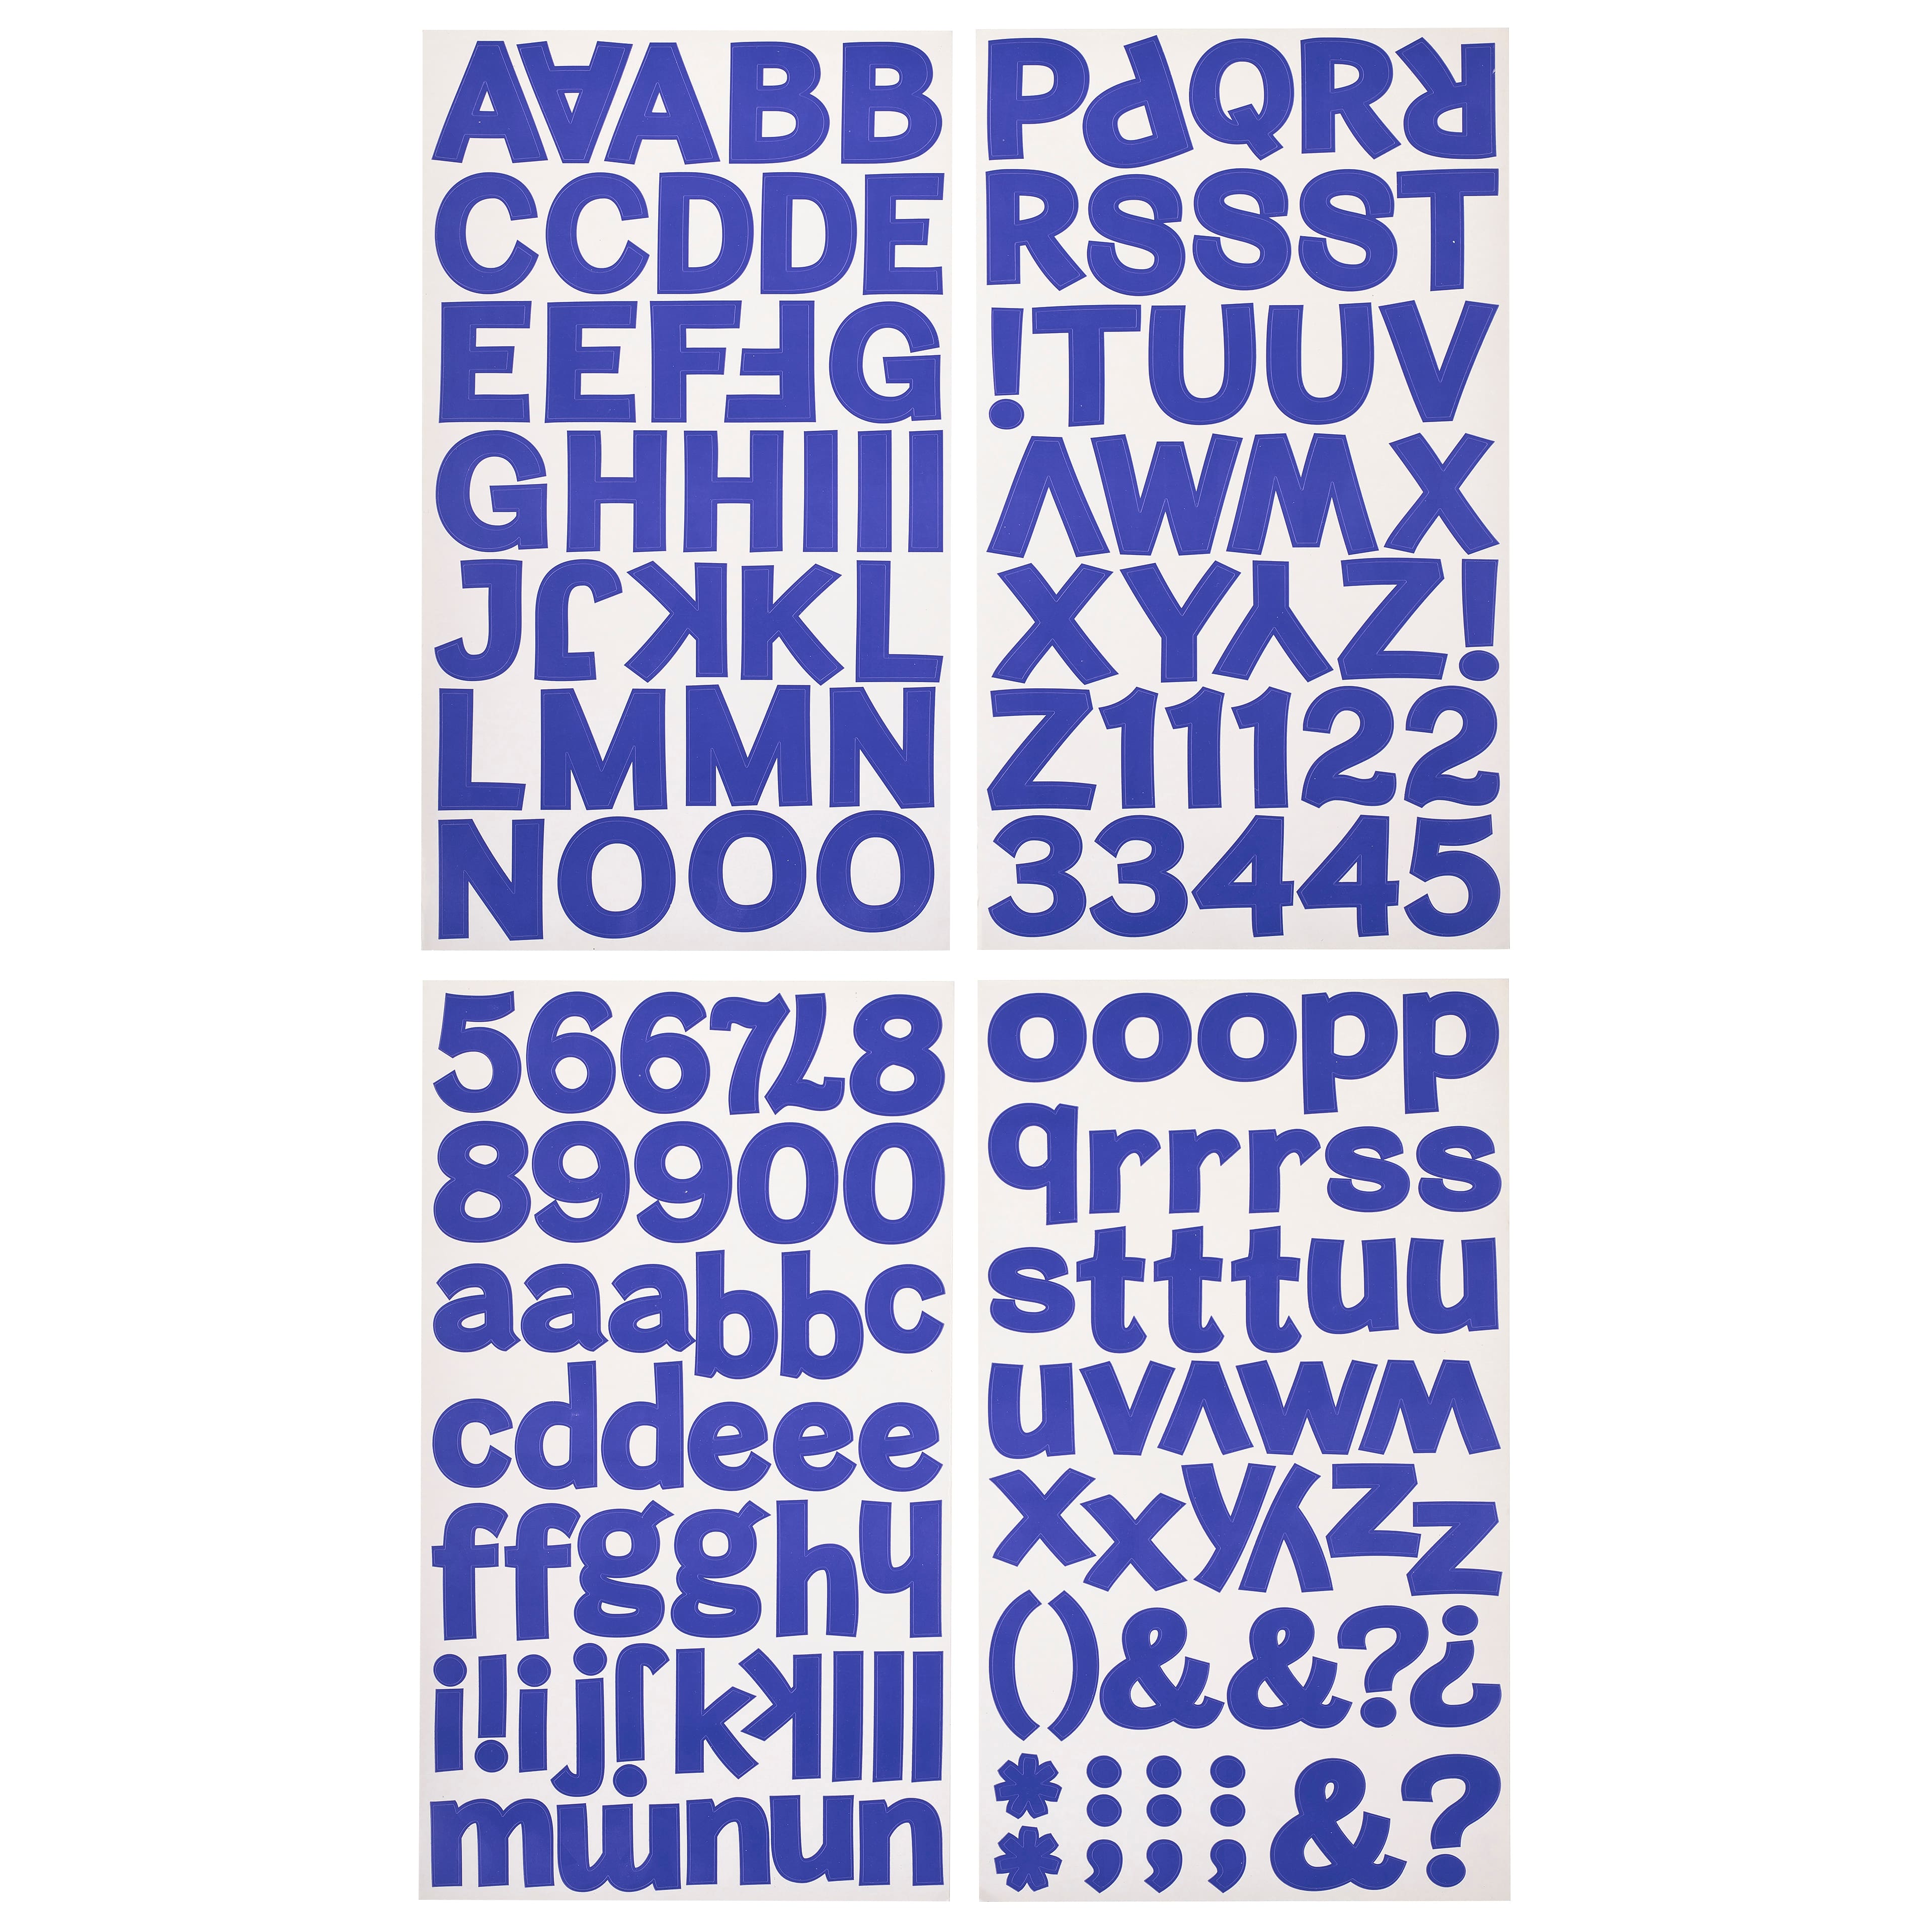 Large Alphabet Stickers